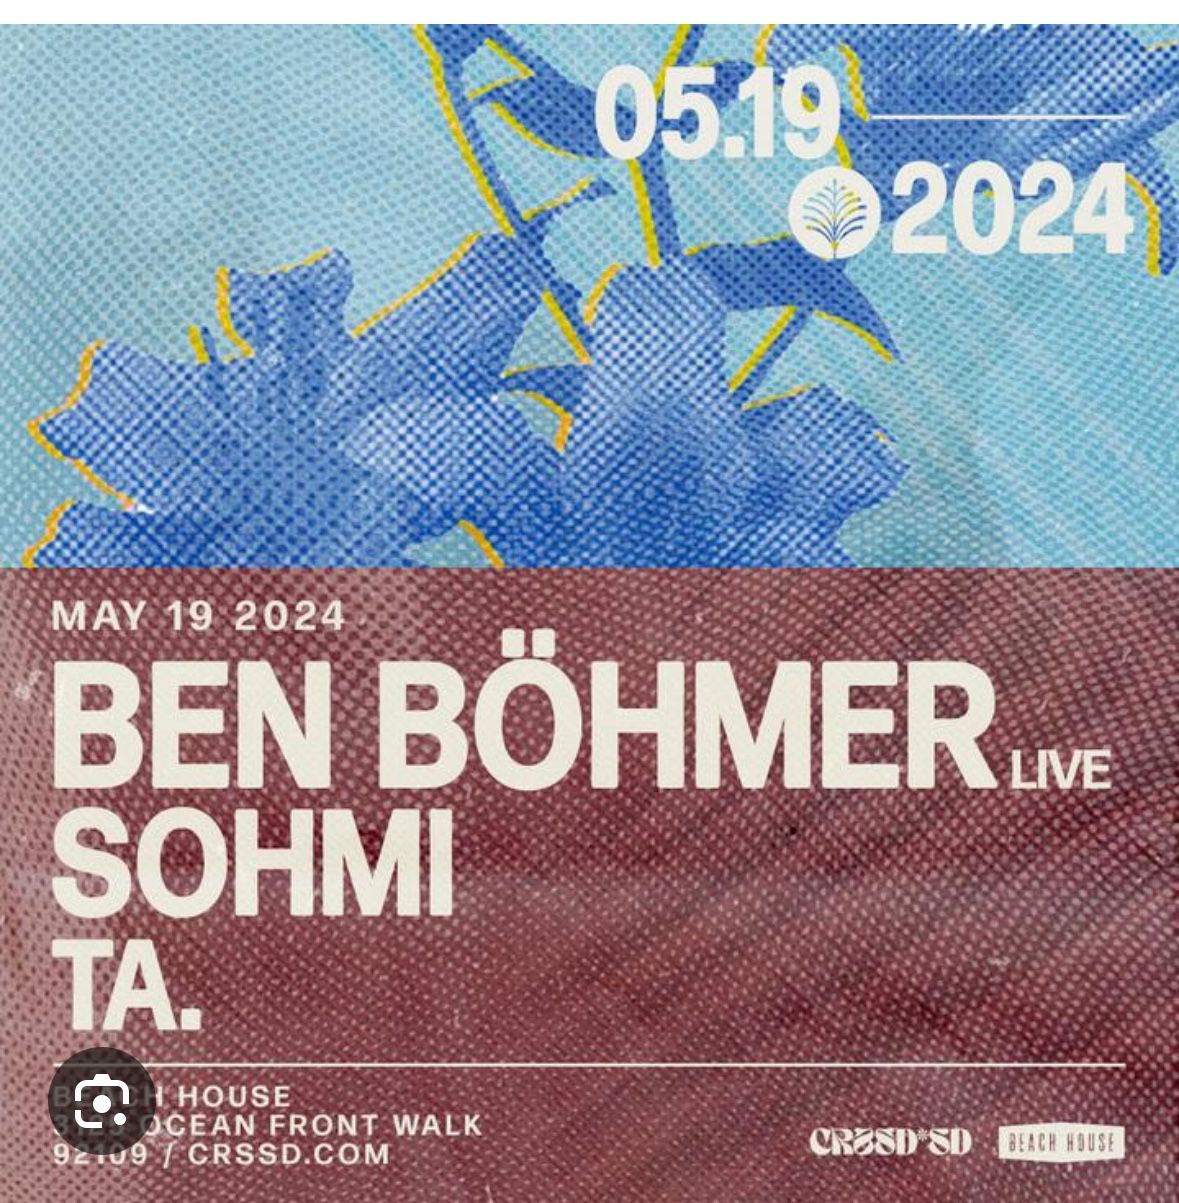 Ben Bohmer - Beach House 2 Tickets 